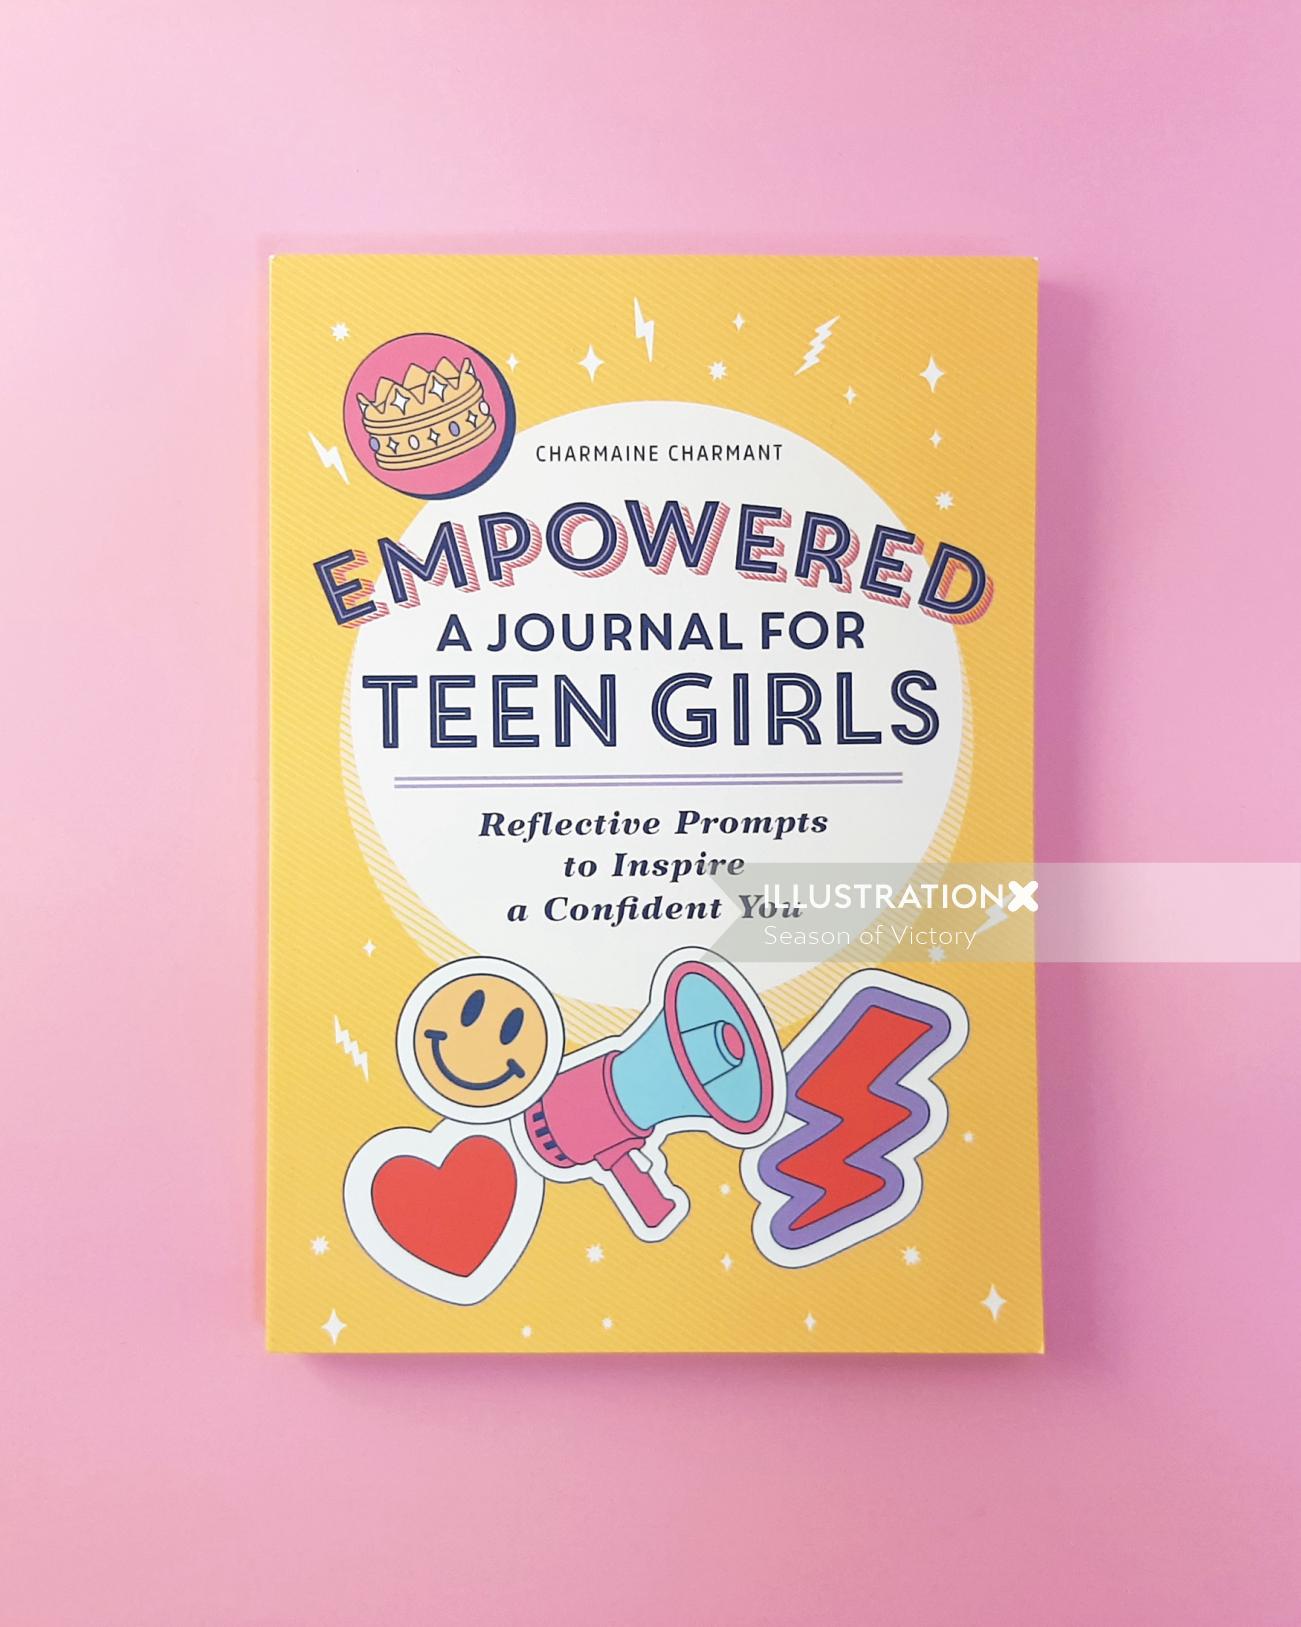 “Empowered: A Journal for Teen Girls” book cover design